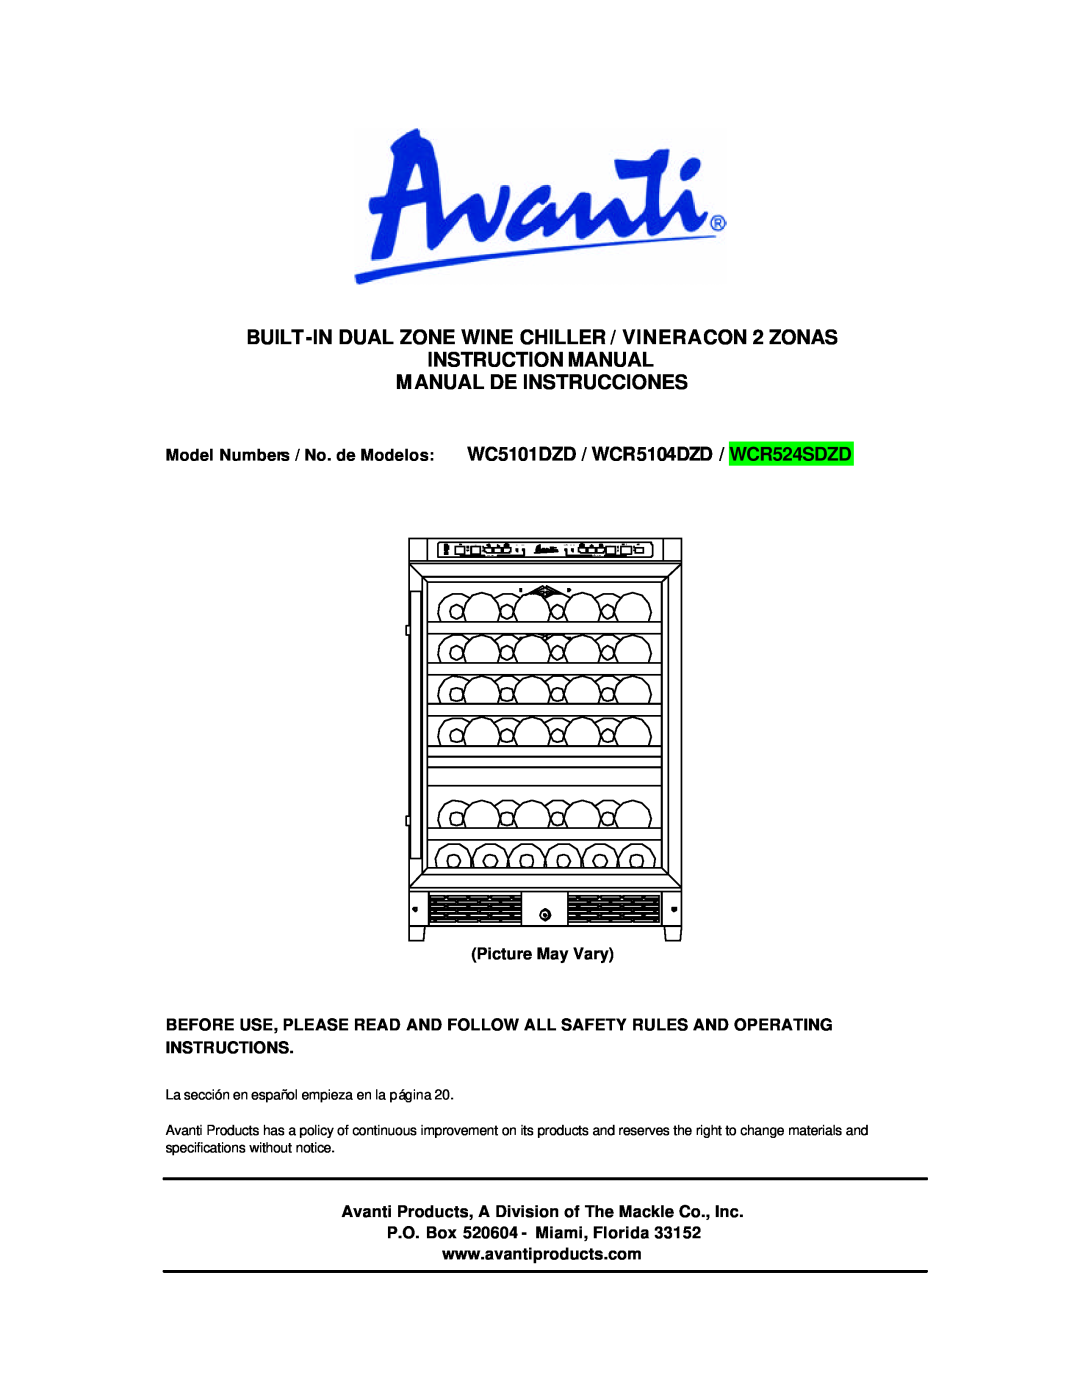 Avanti WCR524SDZD, WCR5104DZD, WC5101DZD instruction manual Picture May Vary, P.O. Box 520604 - Miami, Florida 